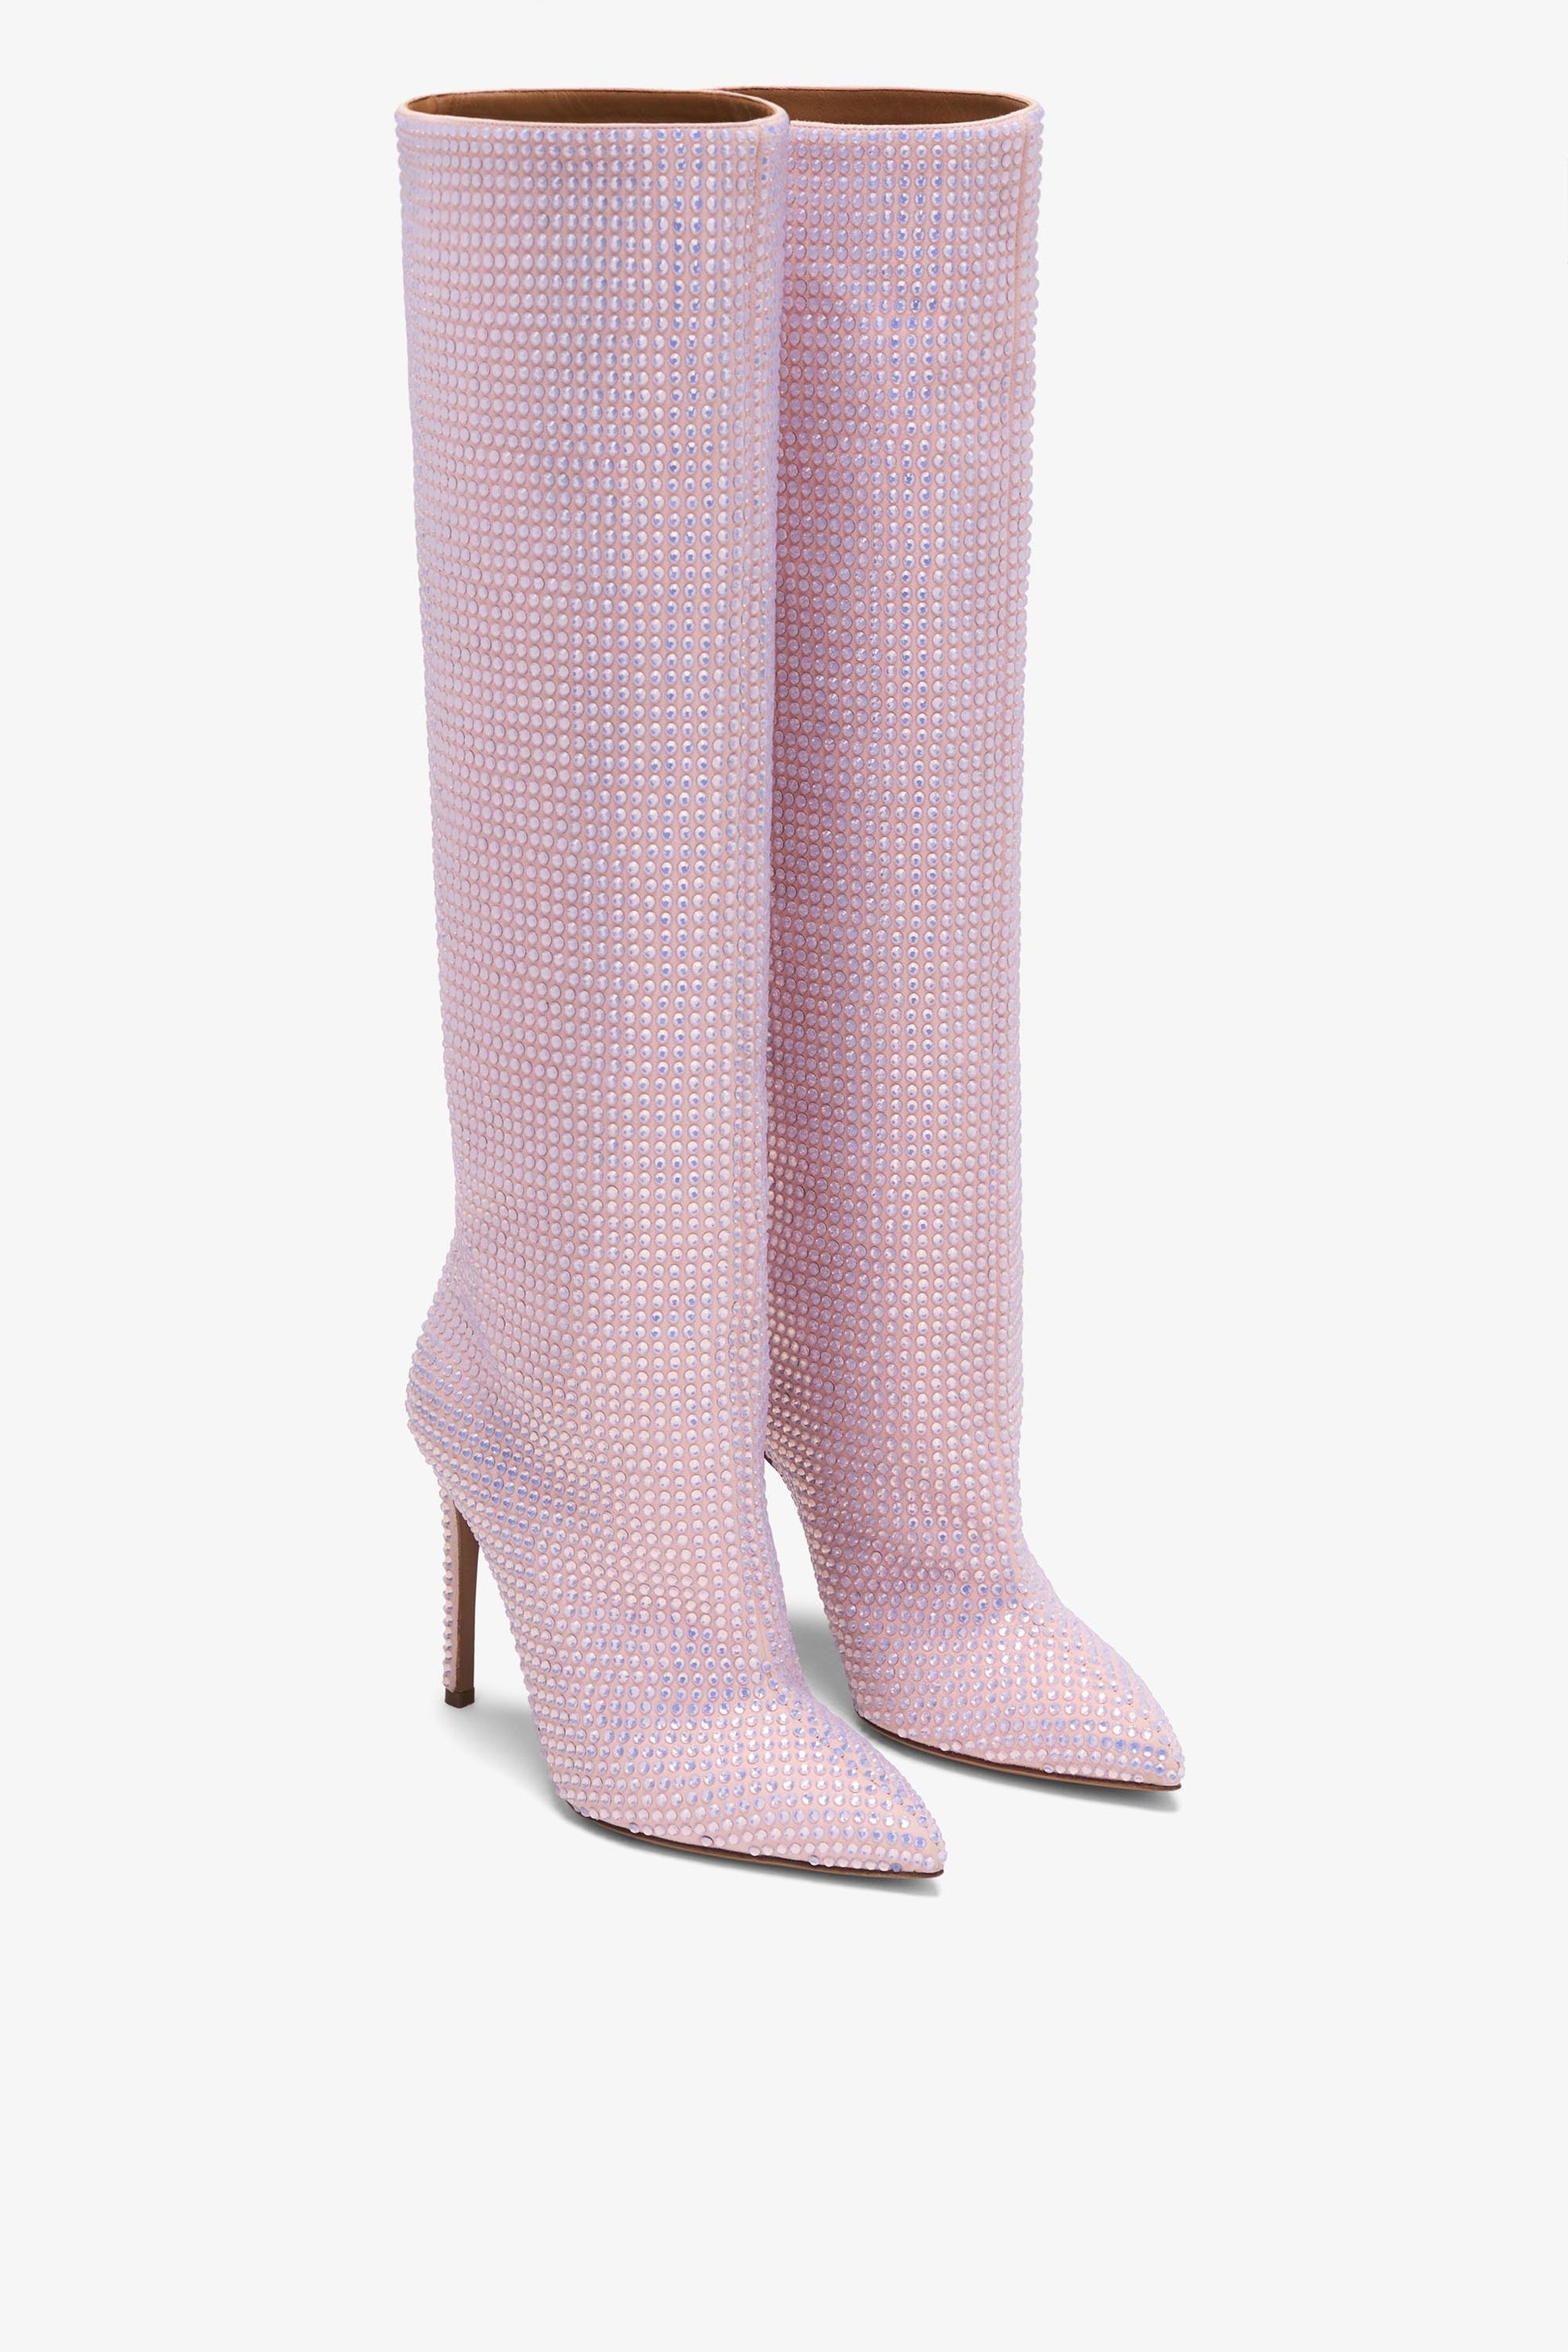 Pink crystal-encrusted suede boot